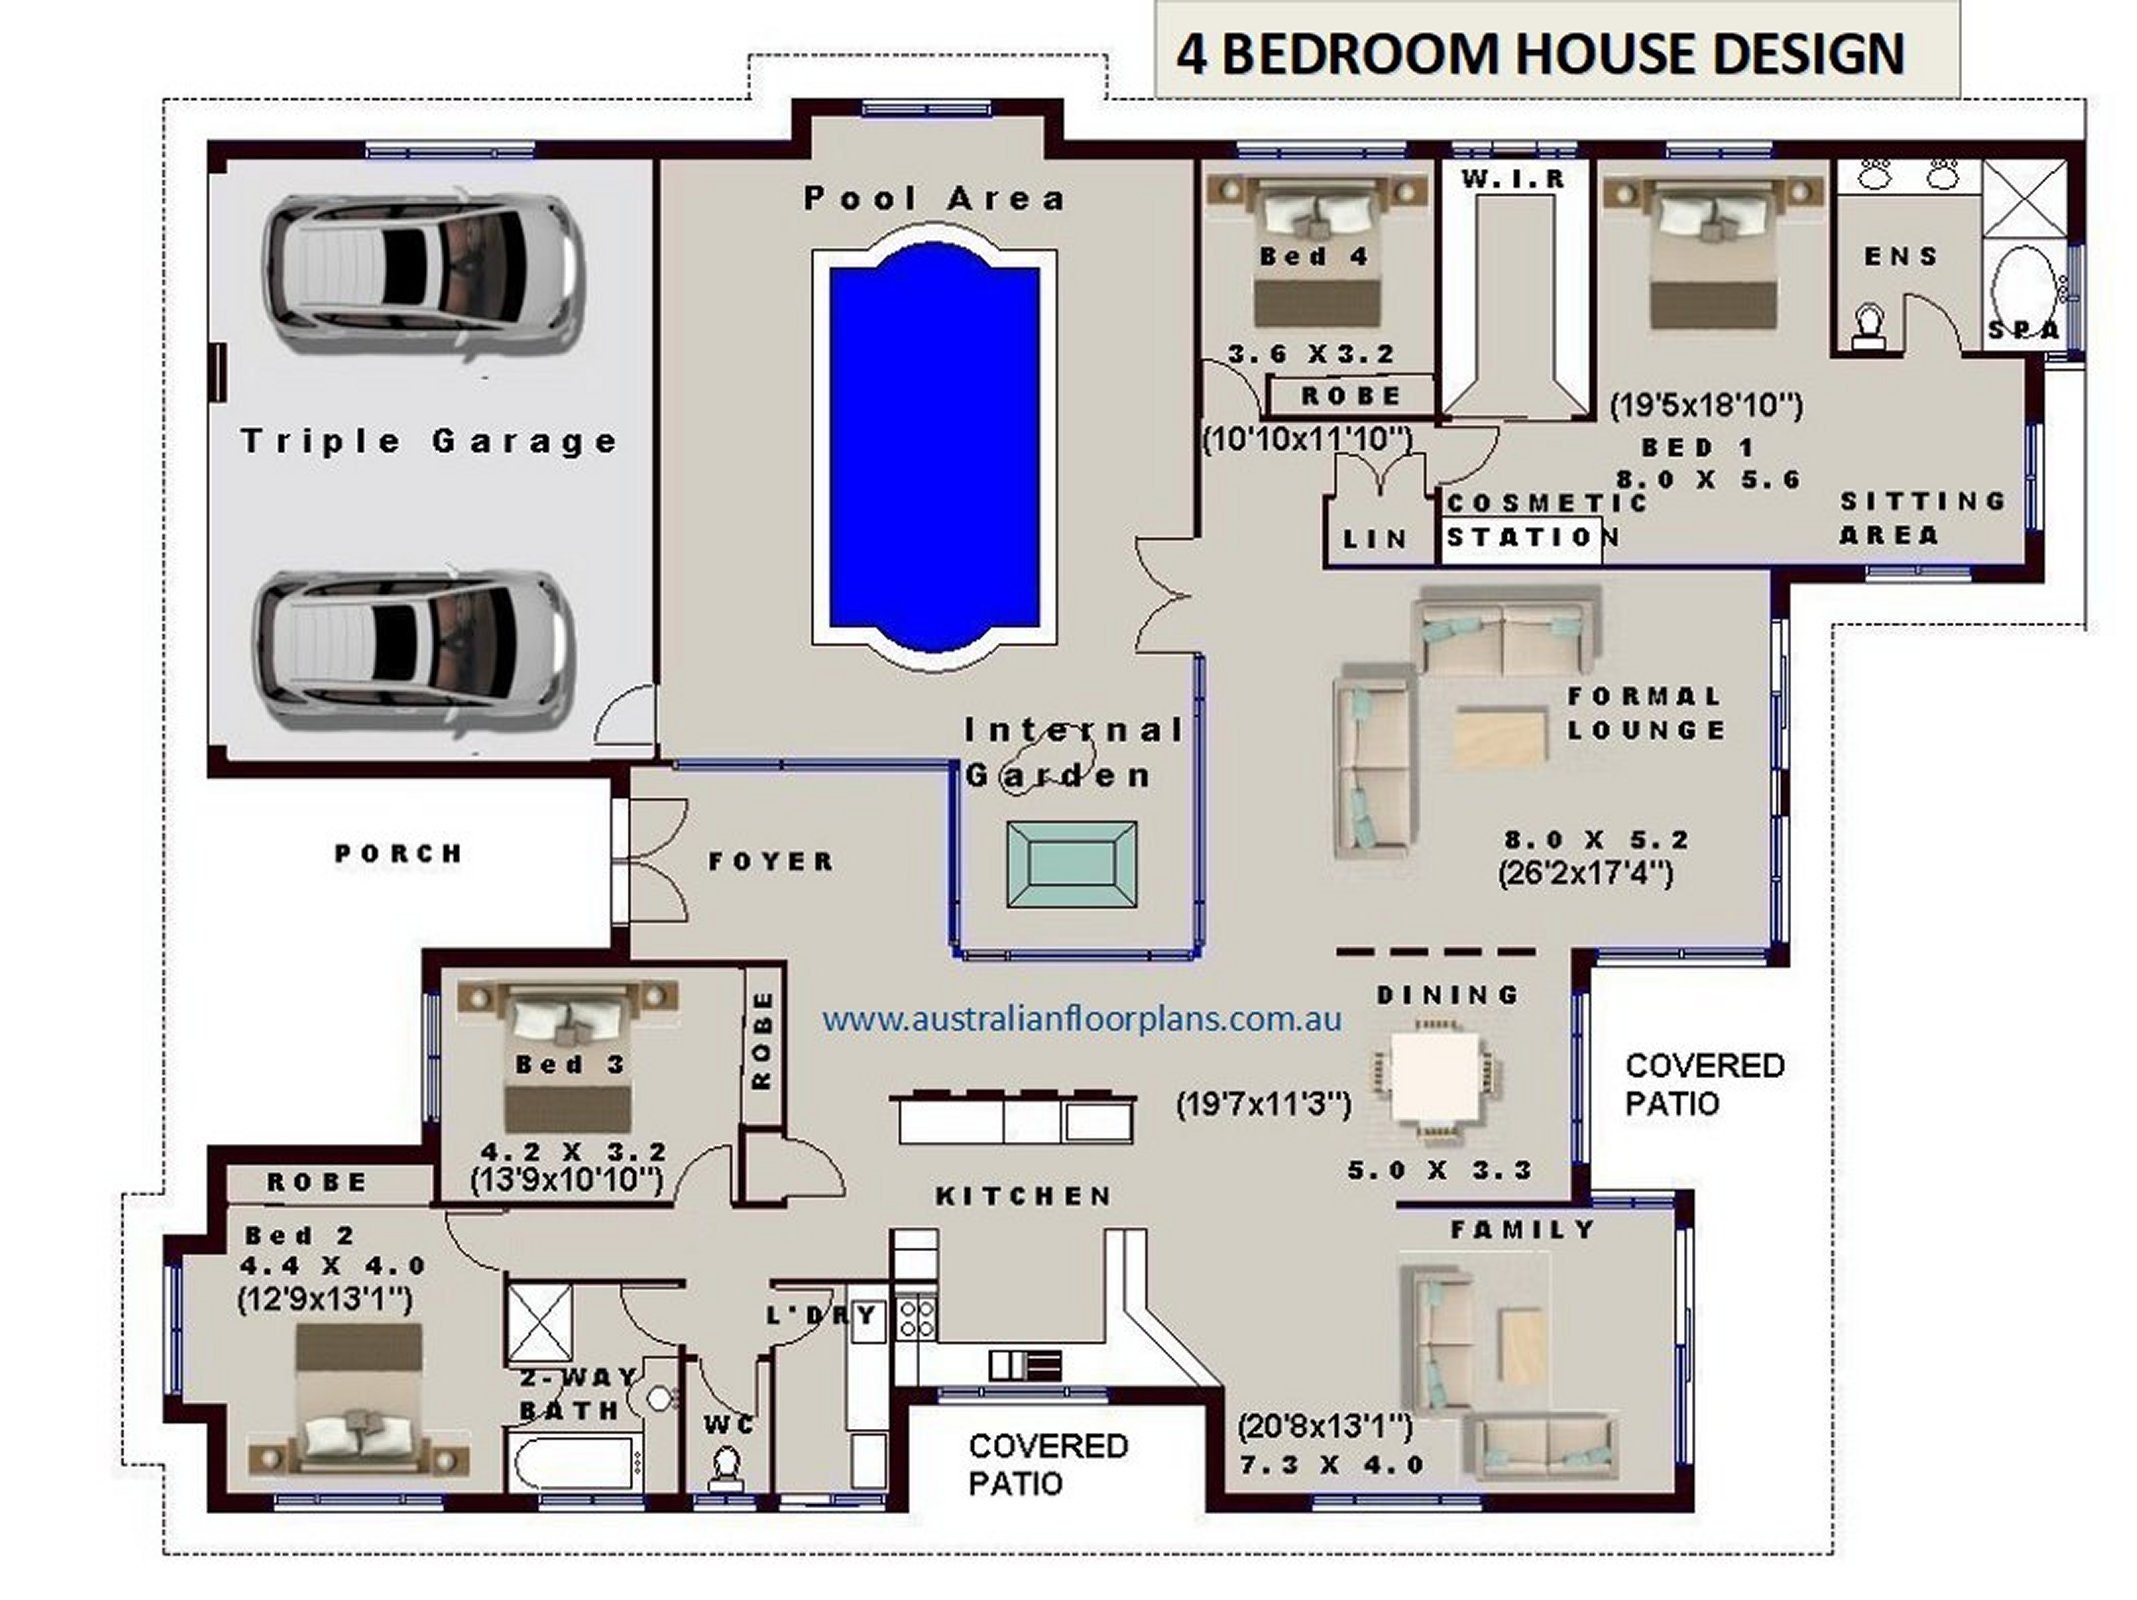 Internal Pool 4 Bedroom House Plans Full Concept Plans For - Etsy